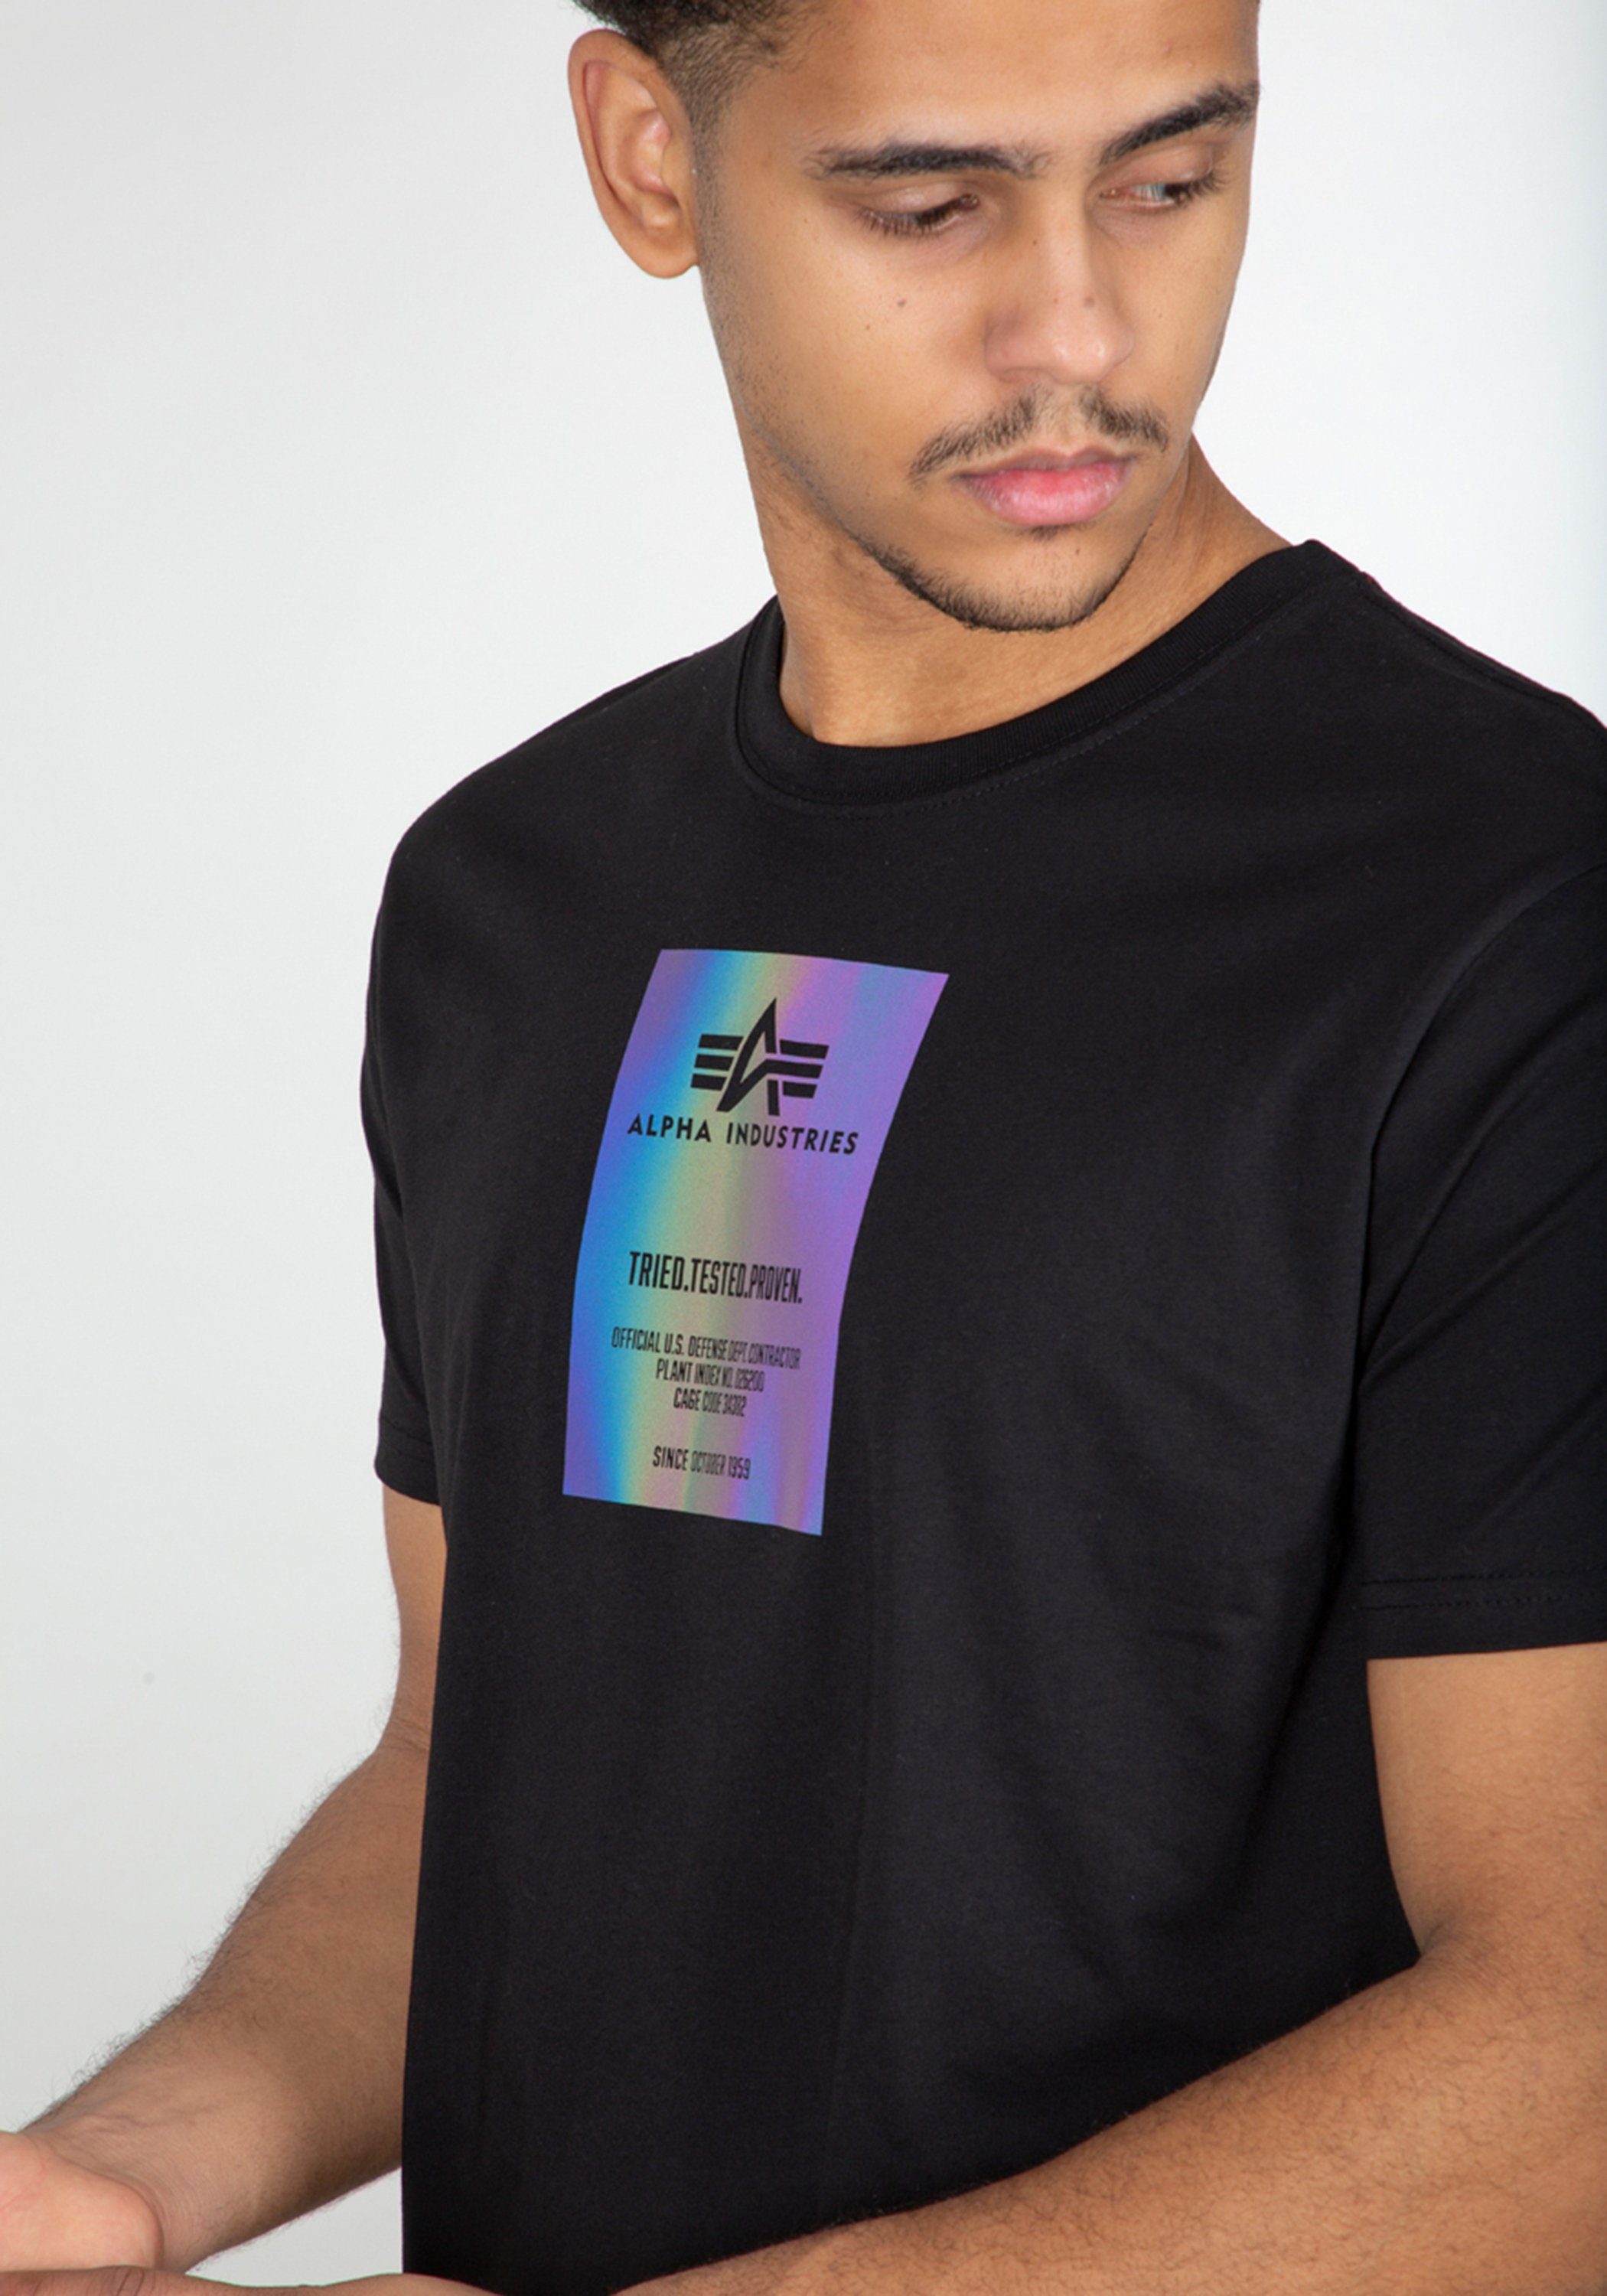 T-Shirt Rainbow Industries Men - Label Reflective Alpha T Alpha T-Shirts Industries